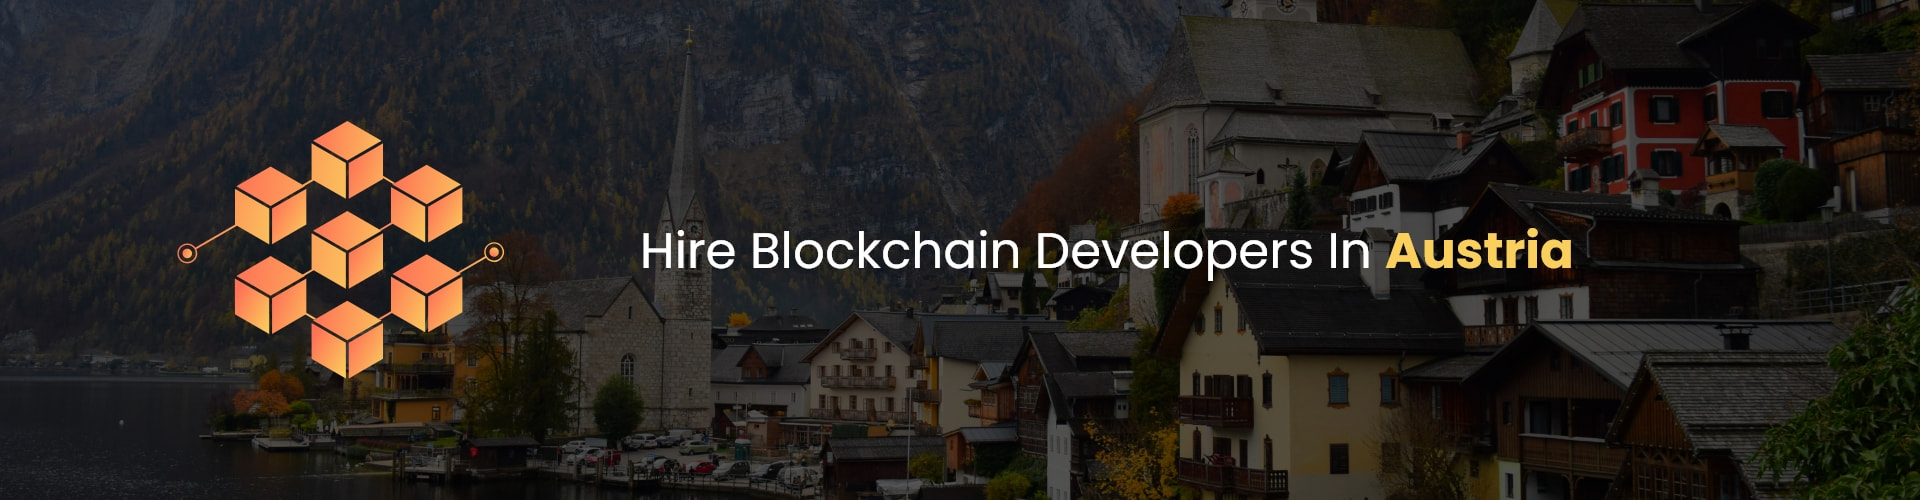 hire blockchain developers in austria